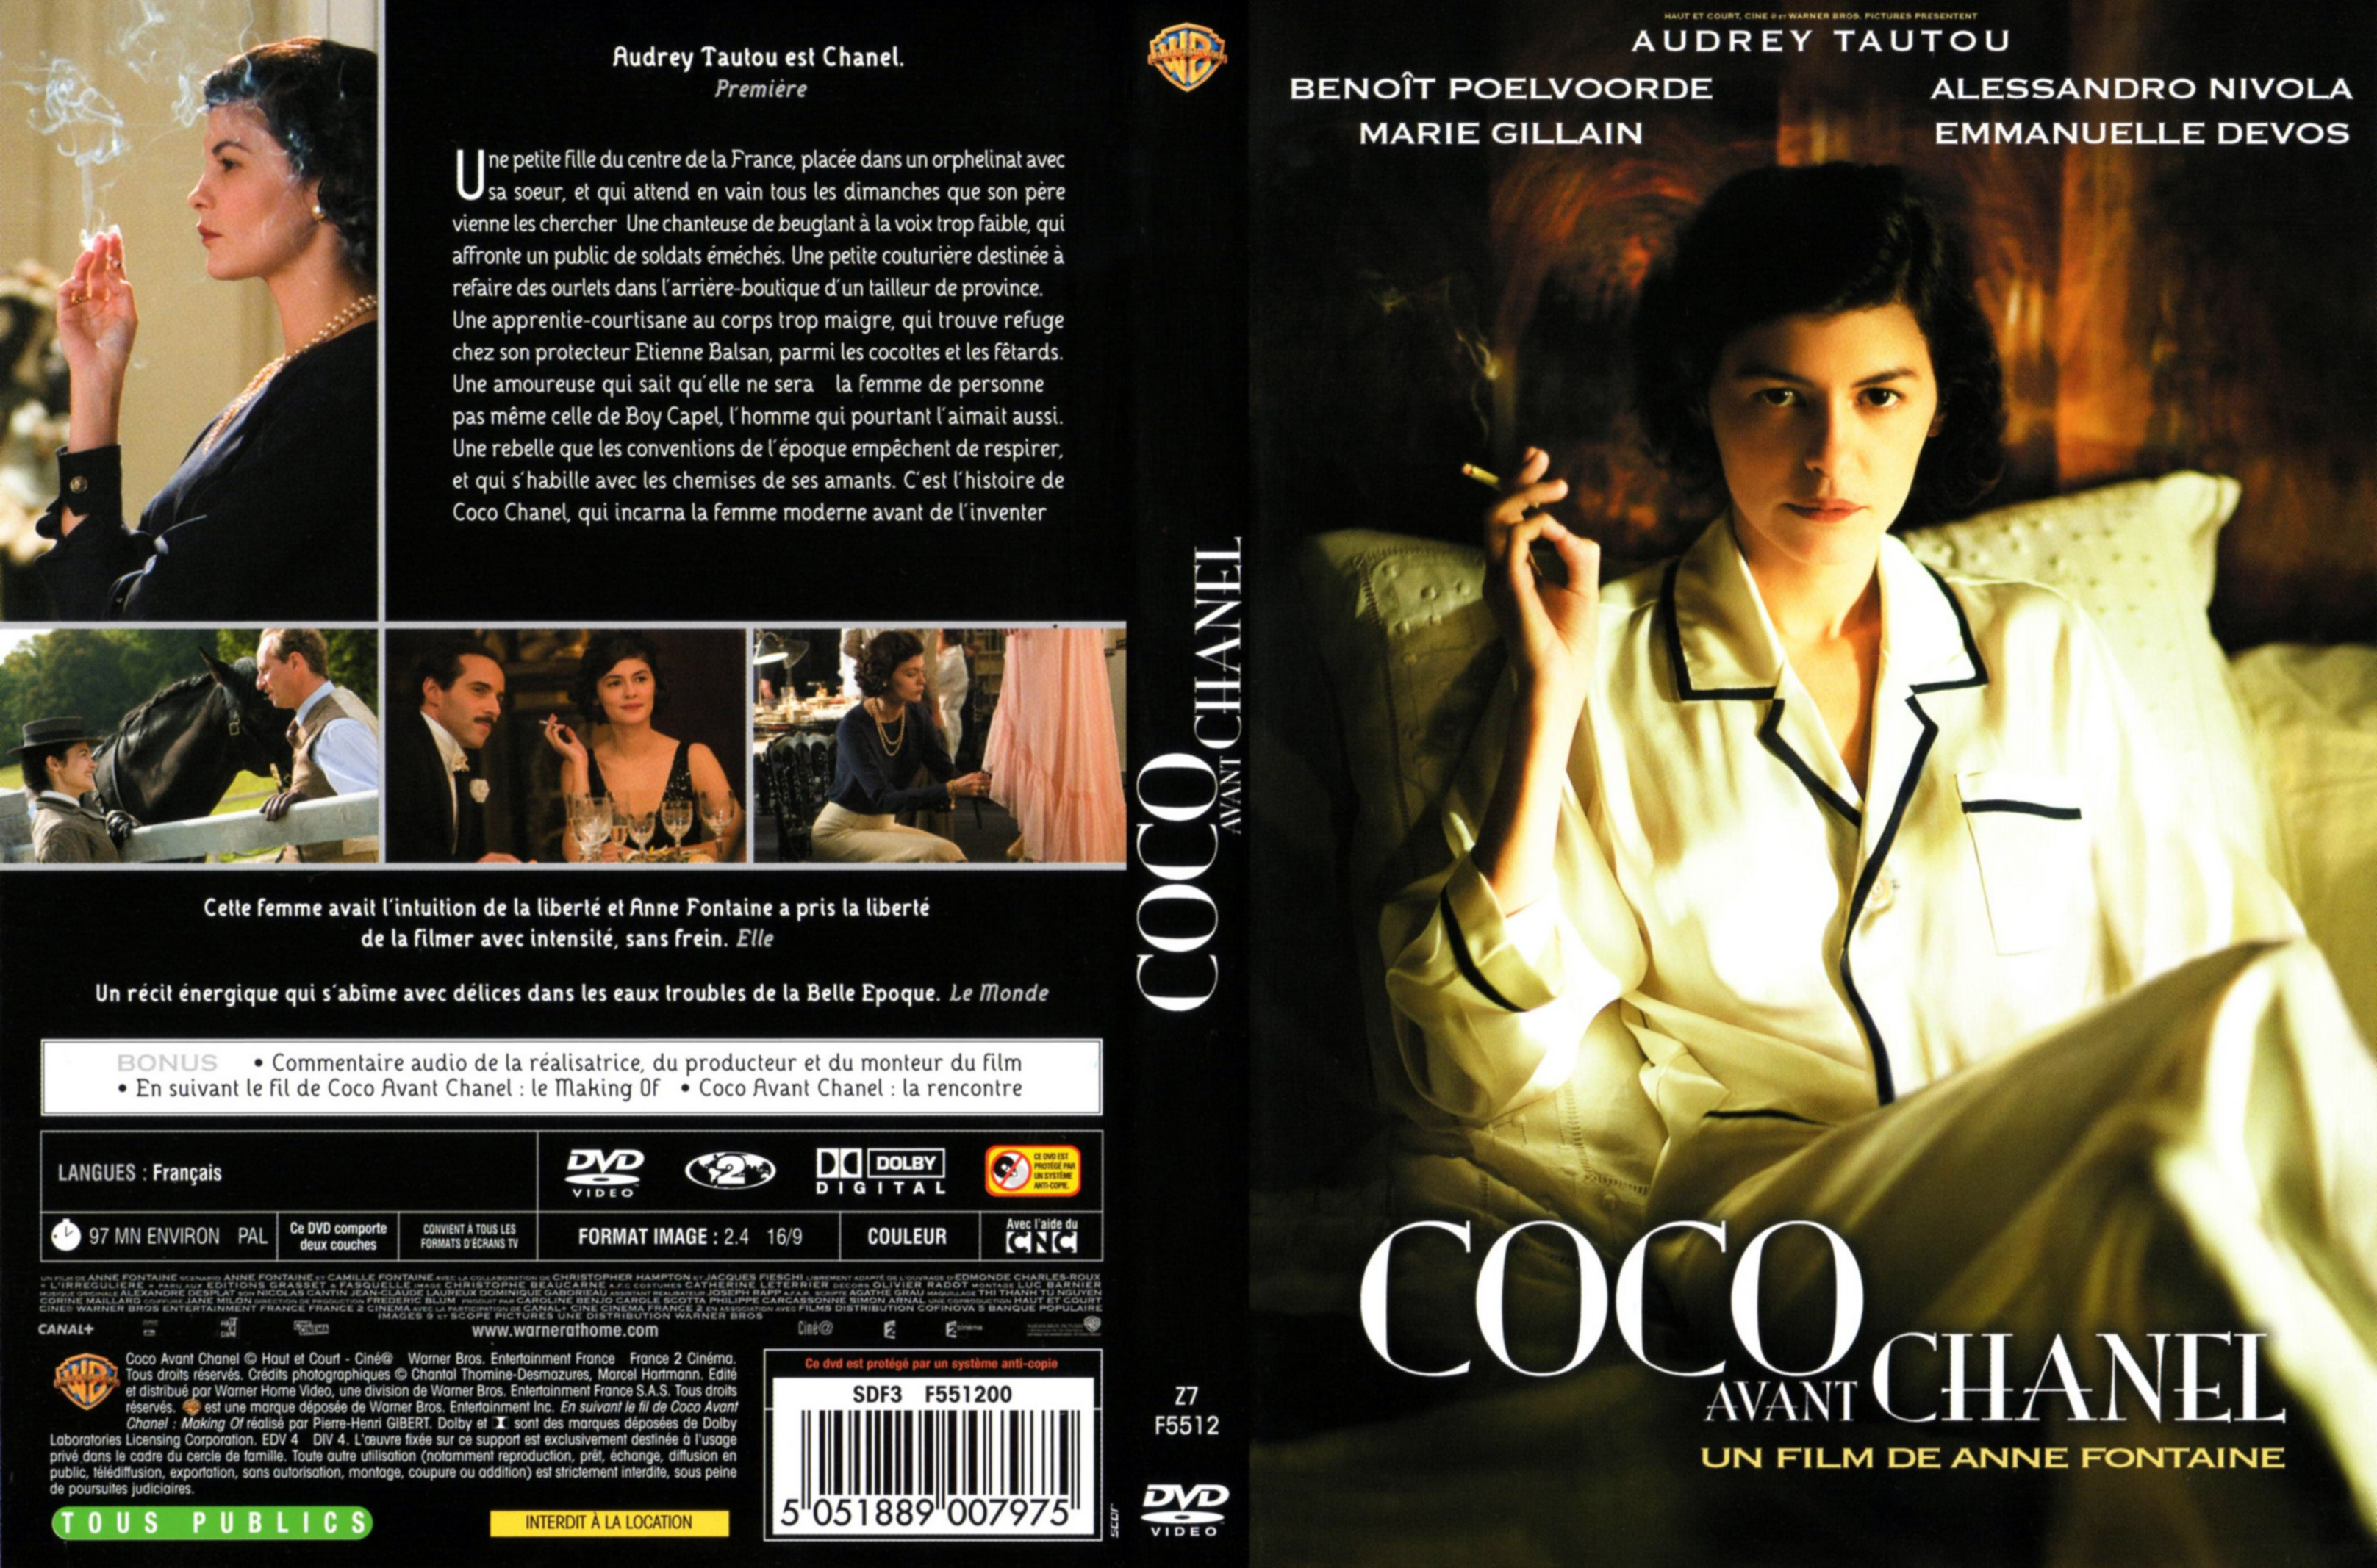 Jaquette DVD Coco avant Chanel